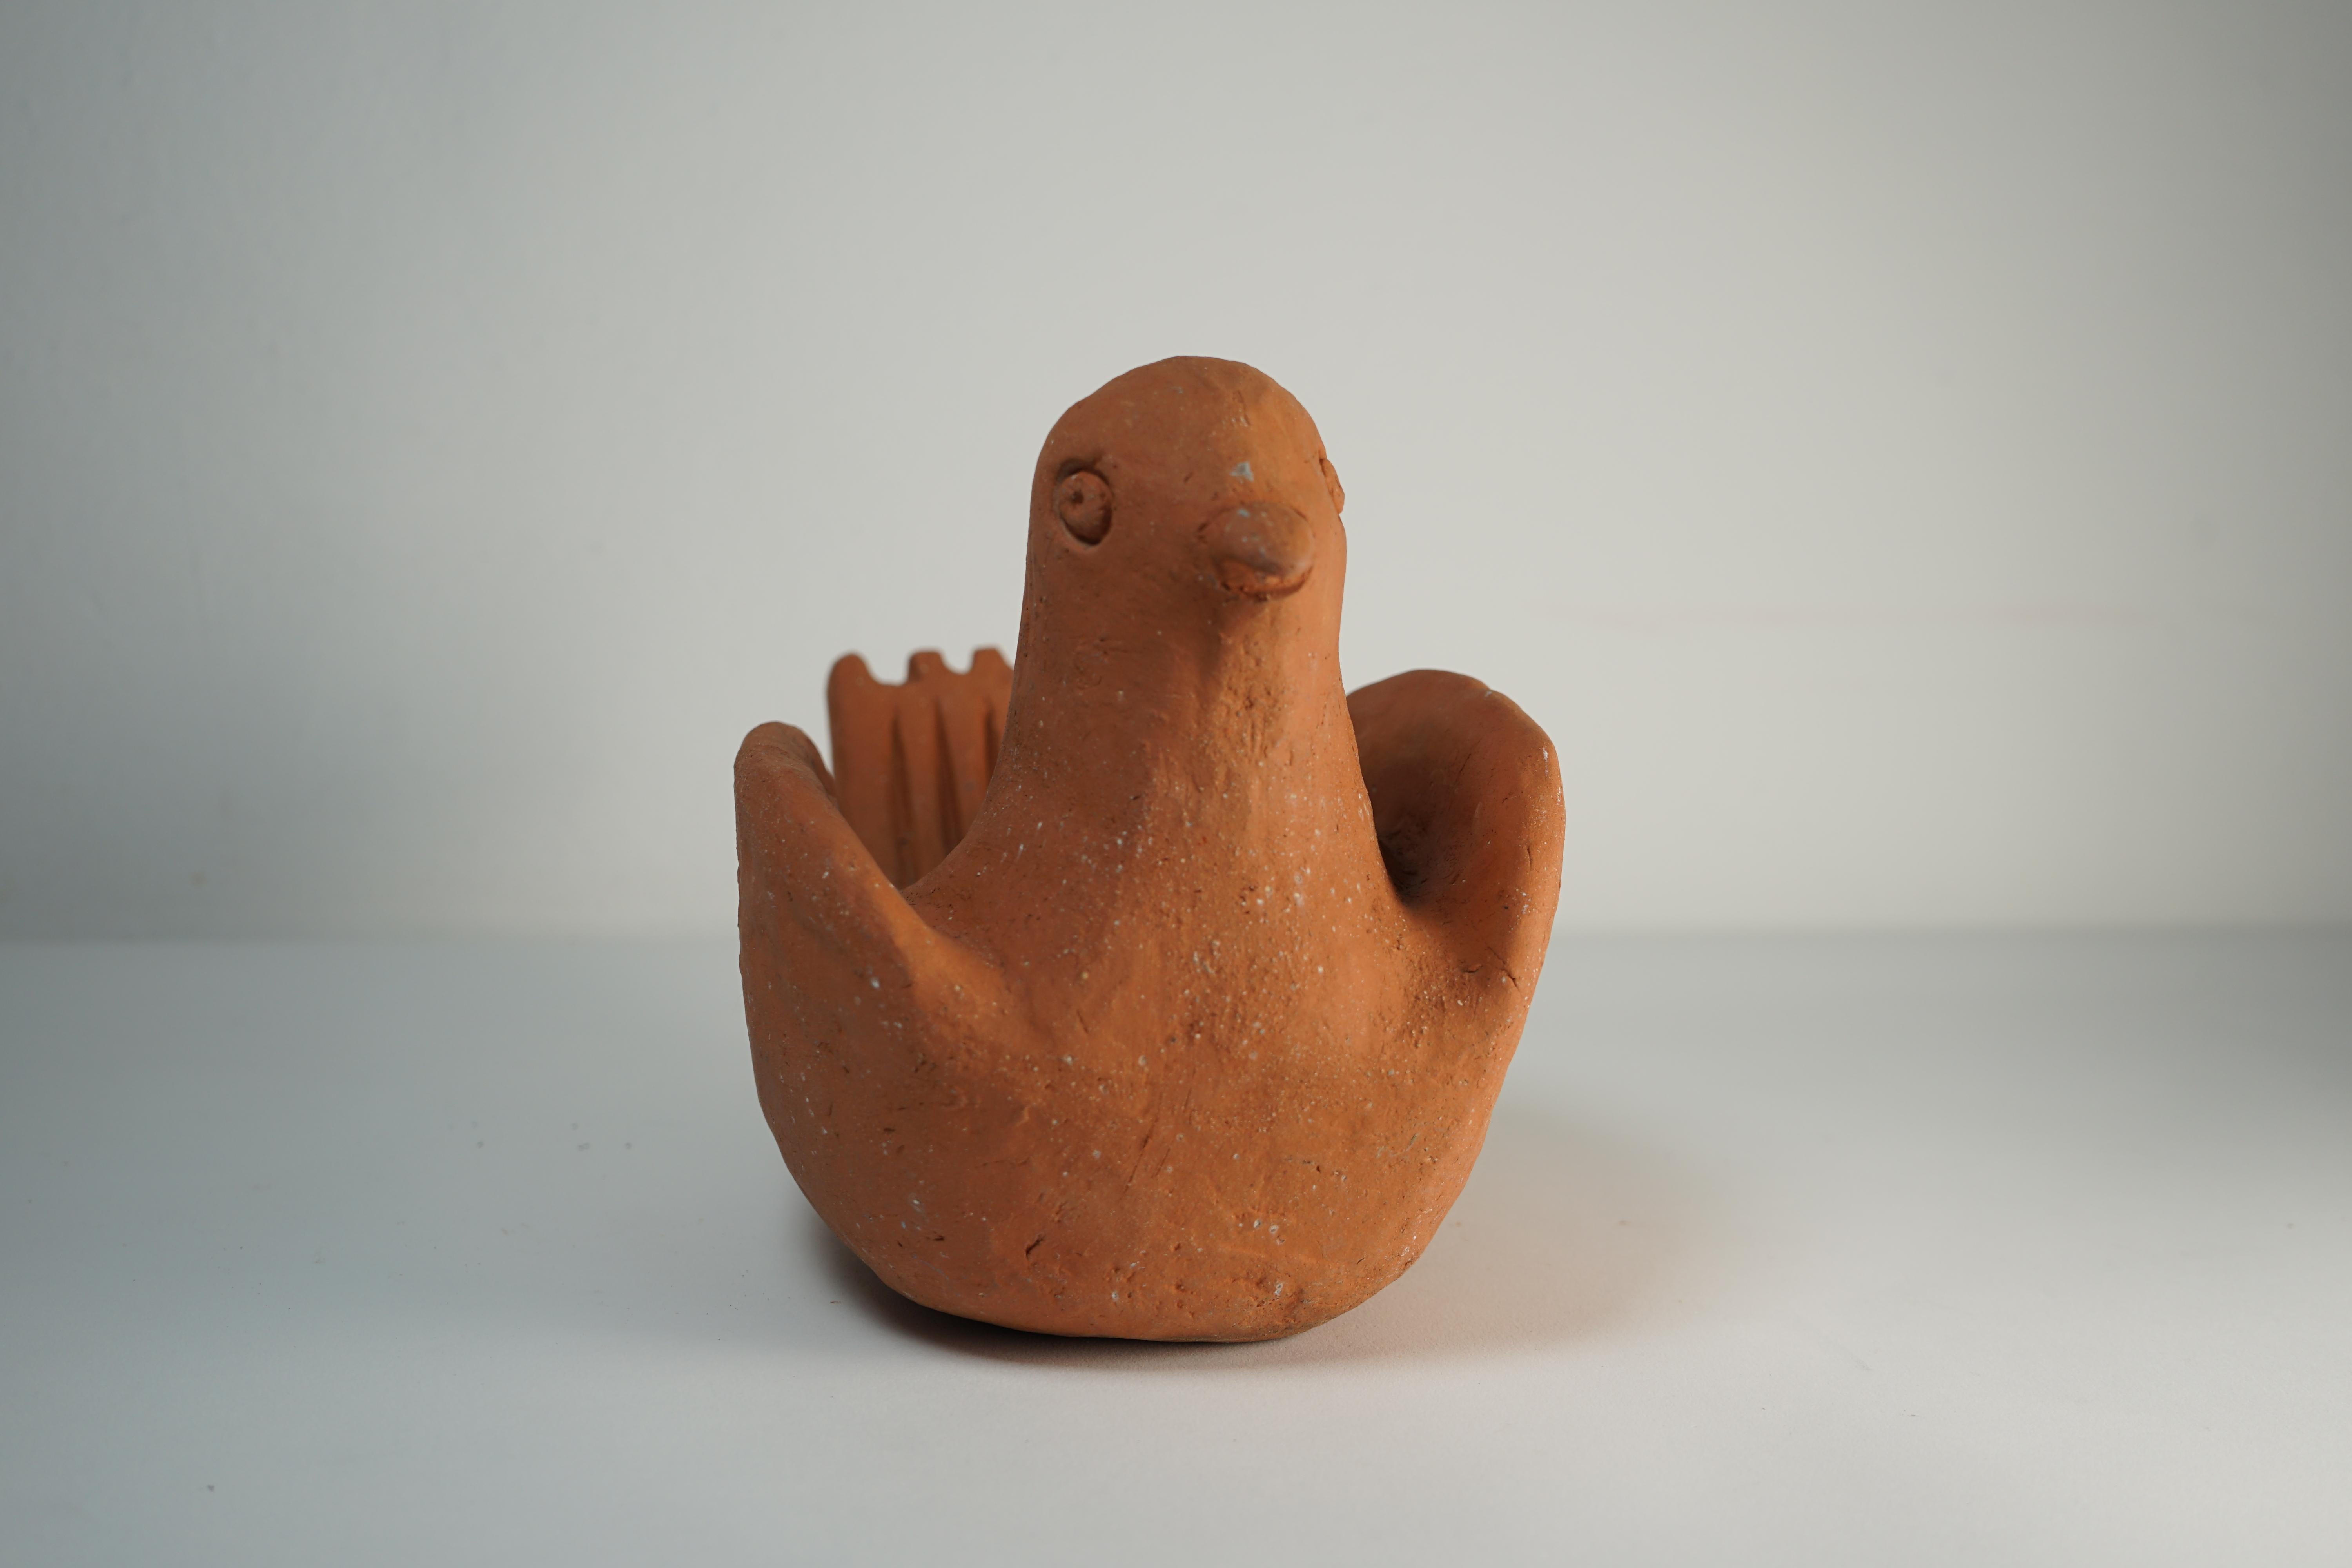 Italian Ceramic Sculpture Dove Model by Nathalie Du Pasquier for Alessio Sarri Editions For Sale